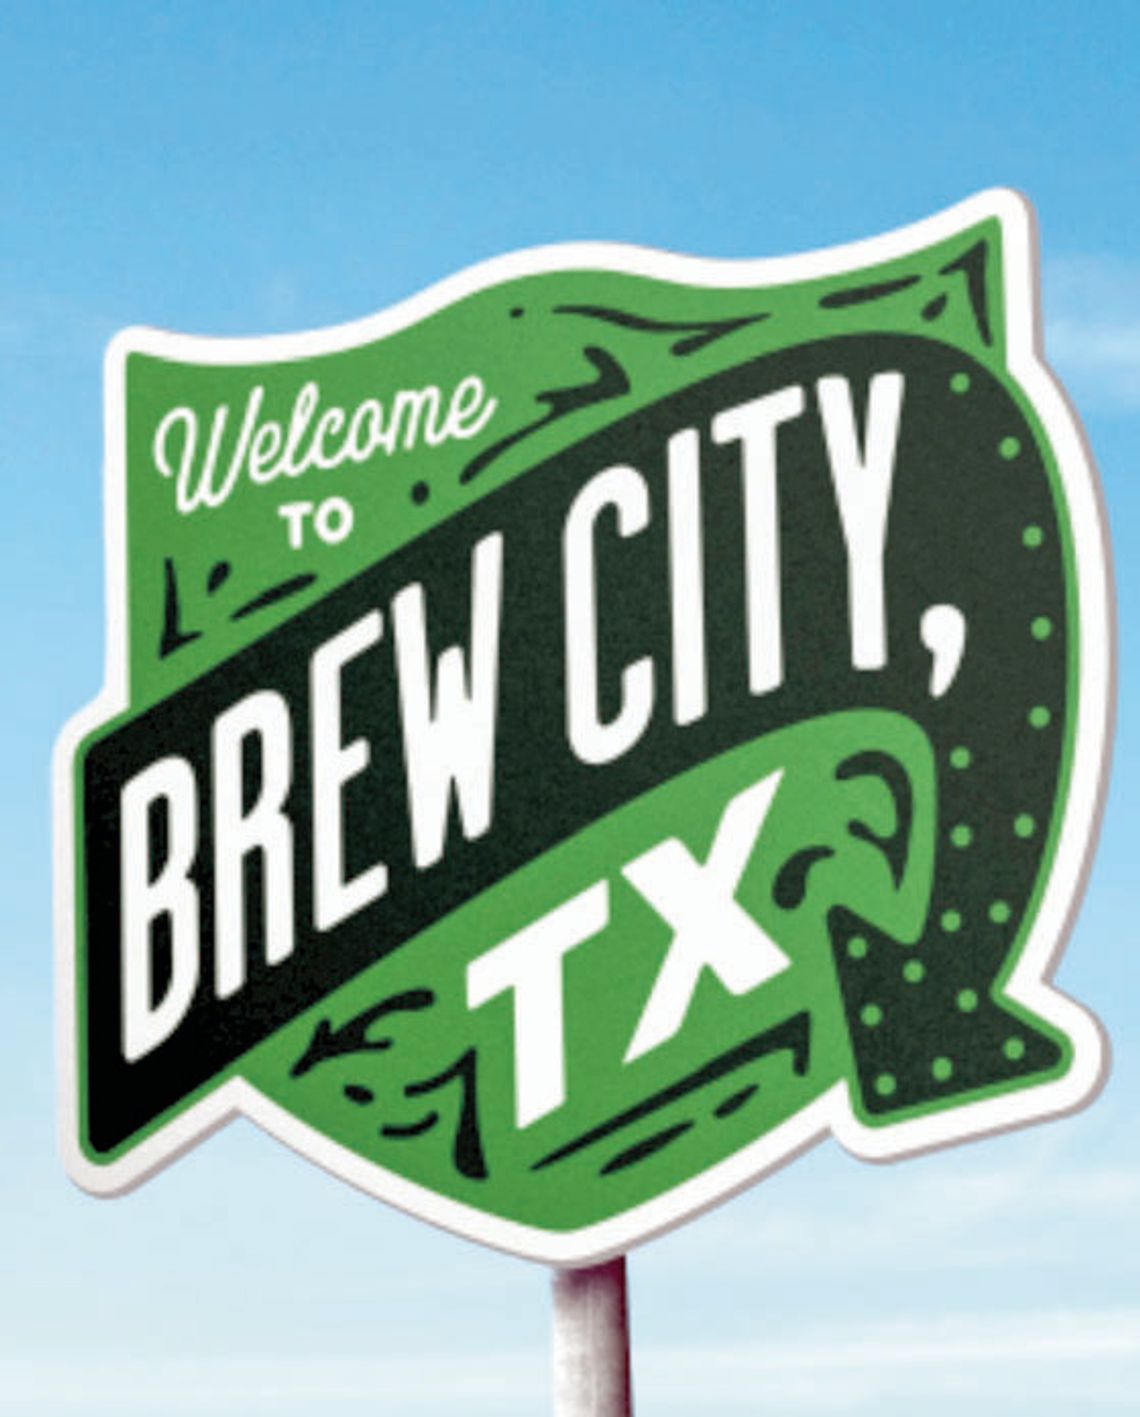 ‘Bock Walk’ wraps week of ‘Brew City Texas’ recognition